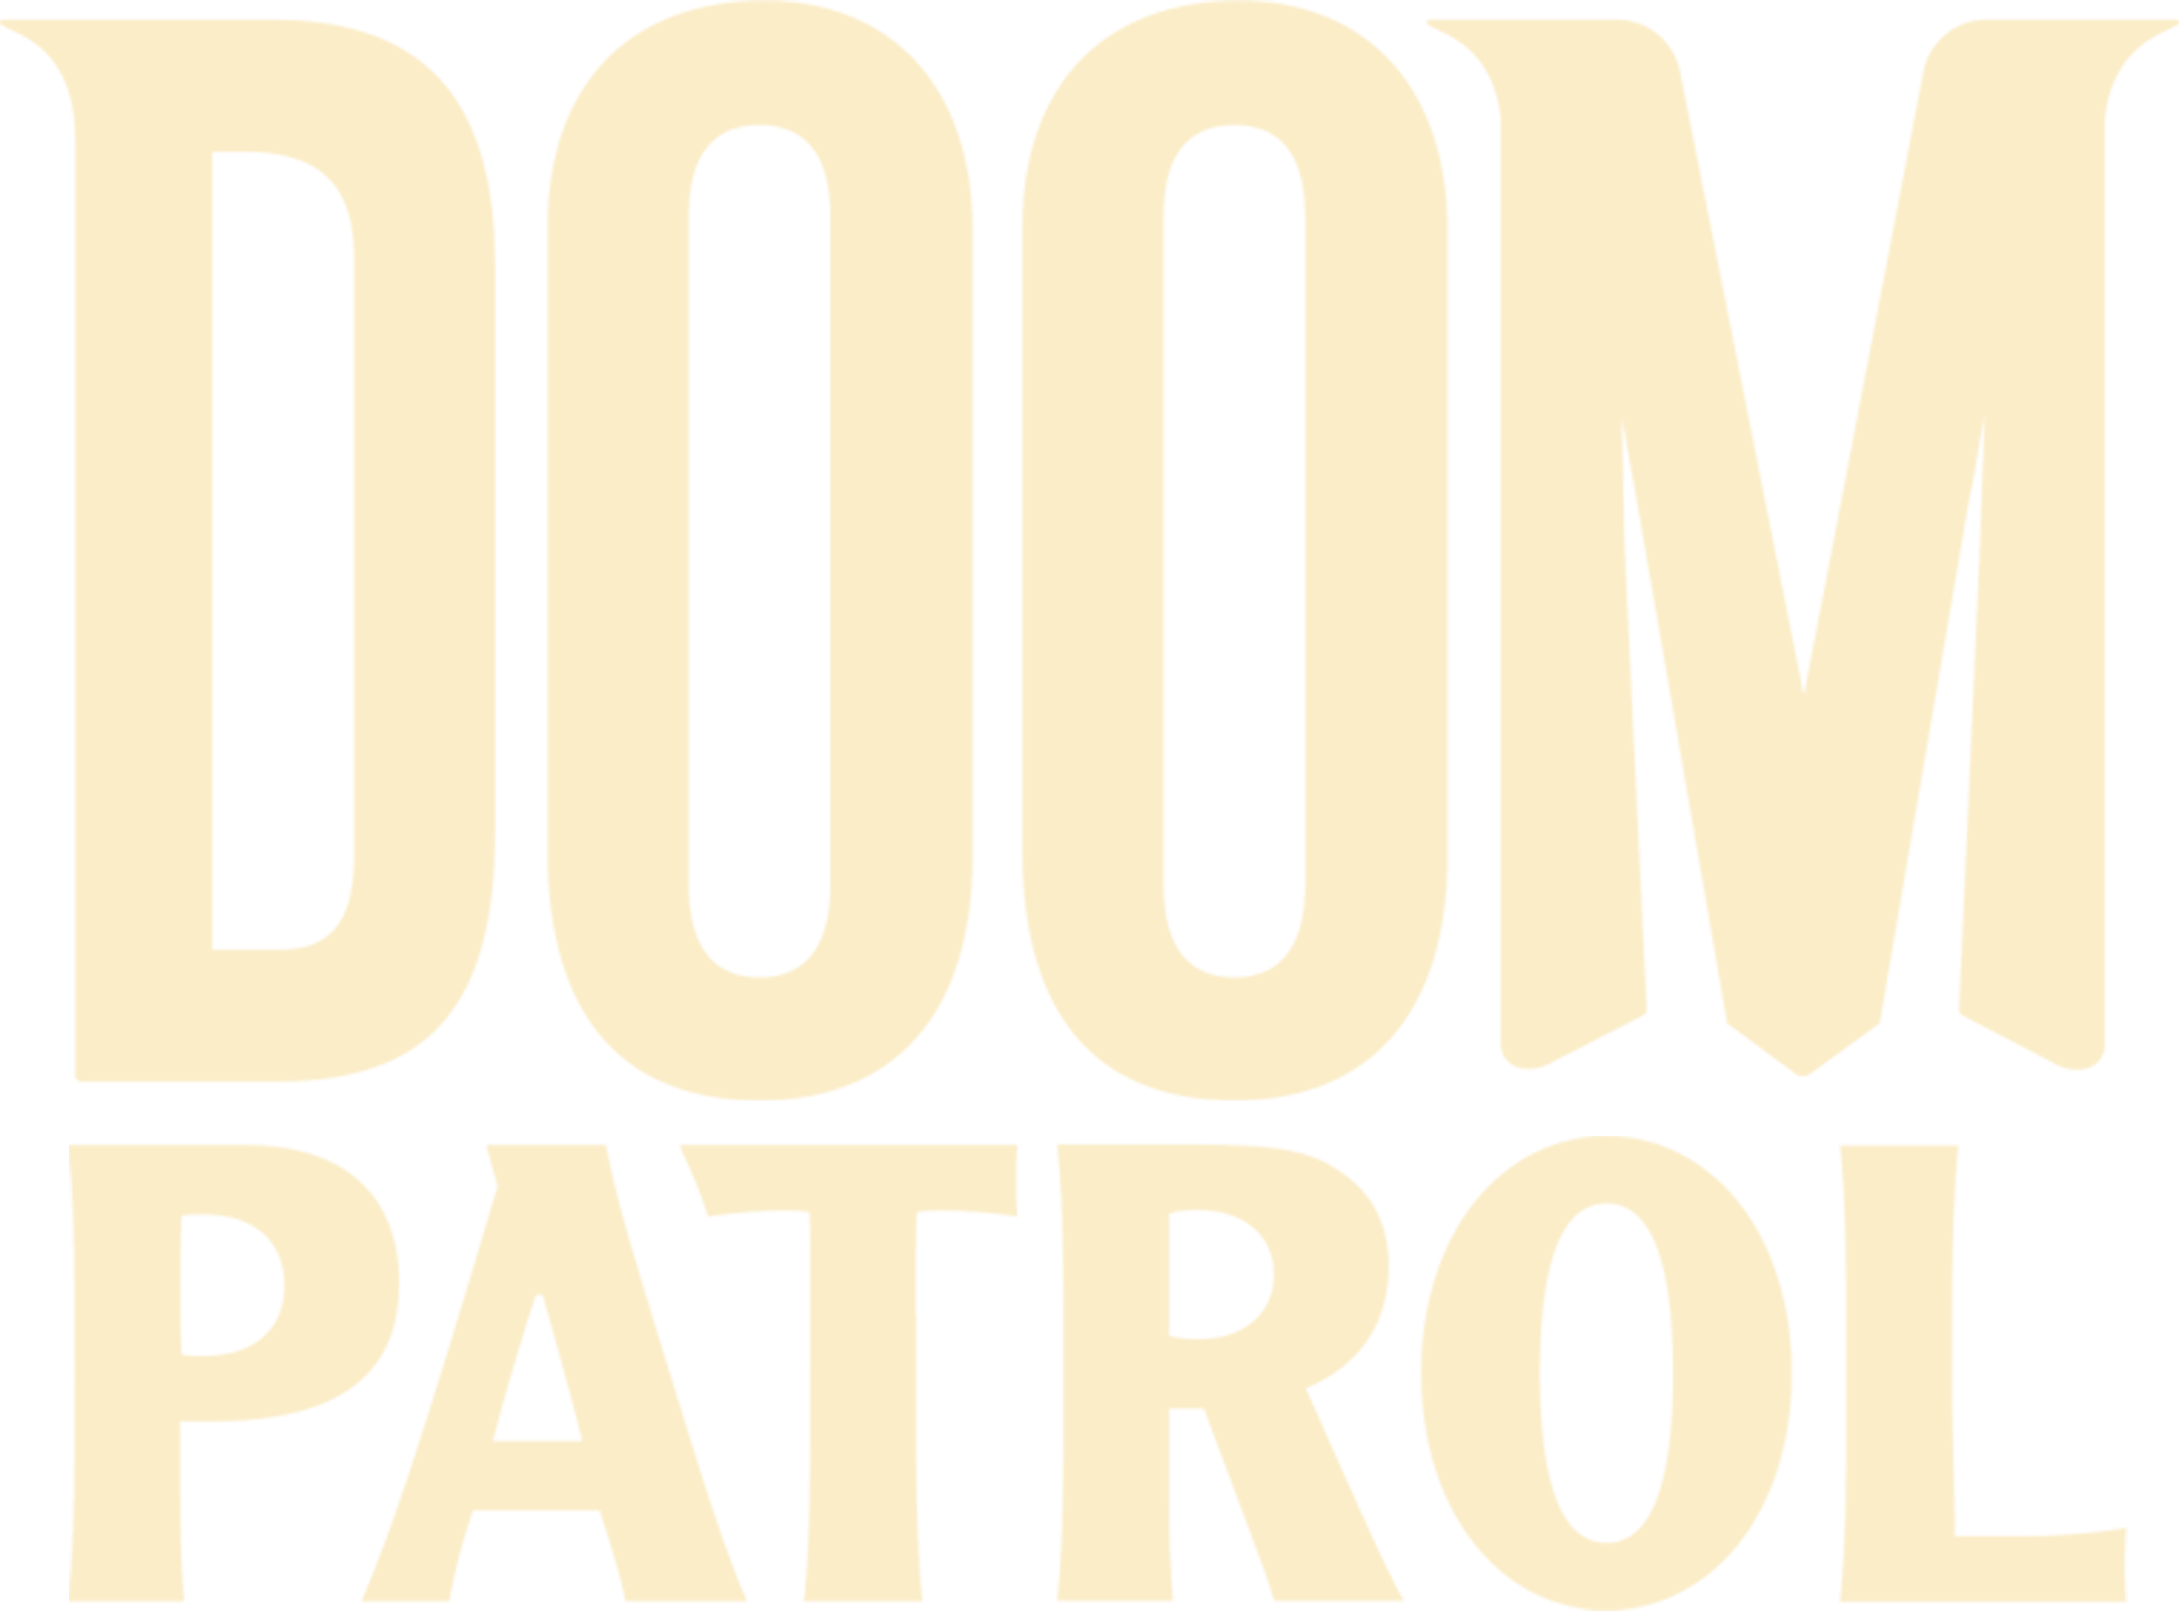 Doom Patrol logo